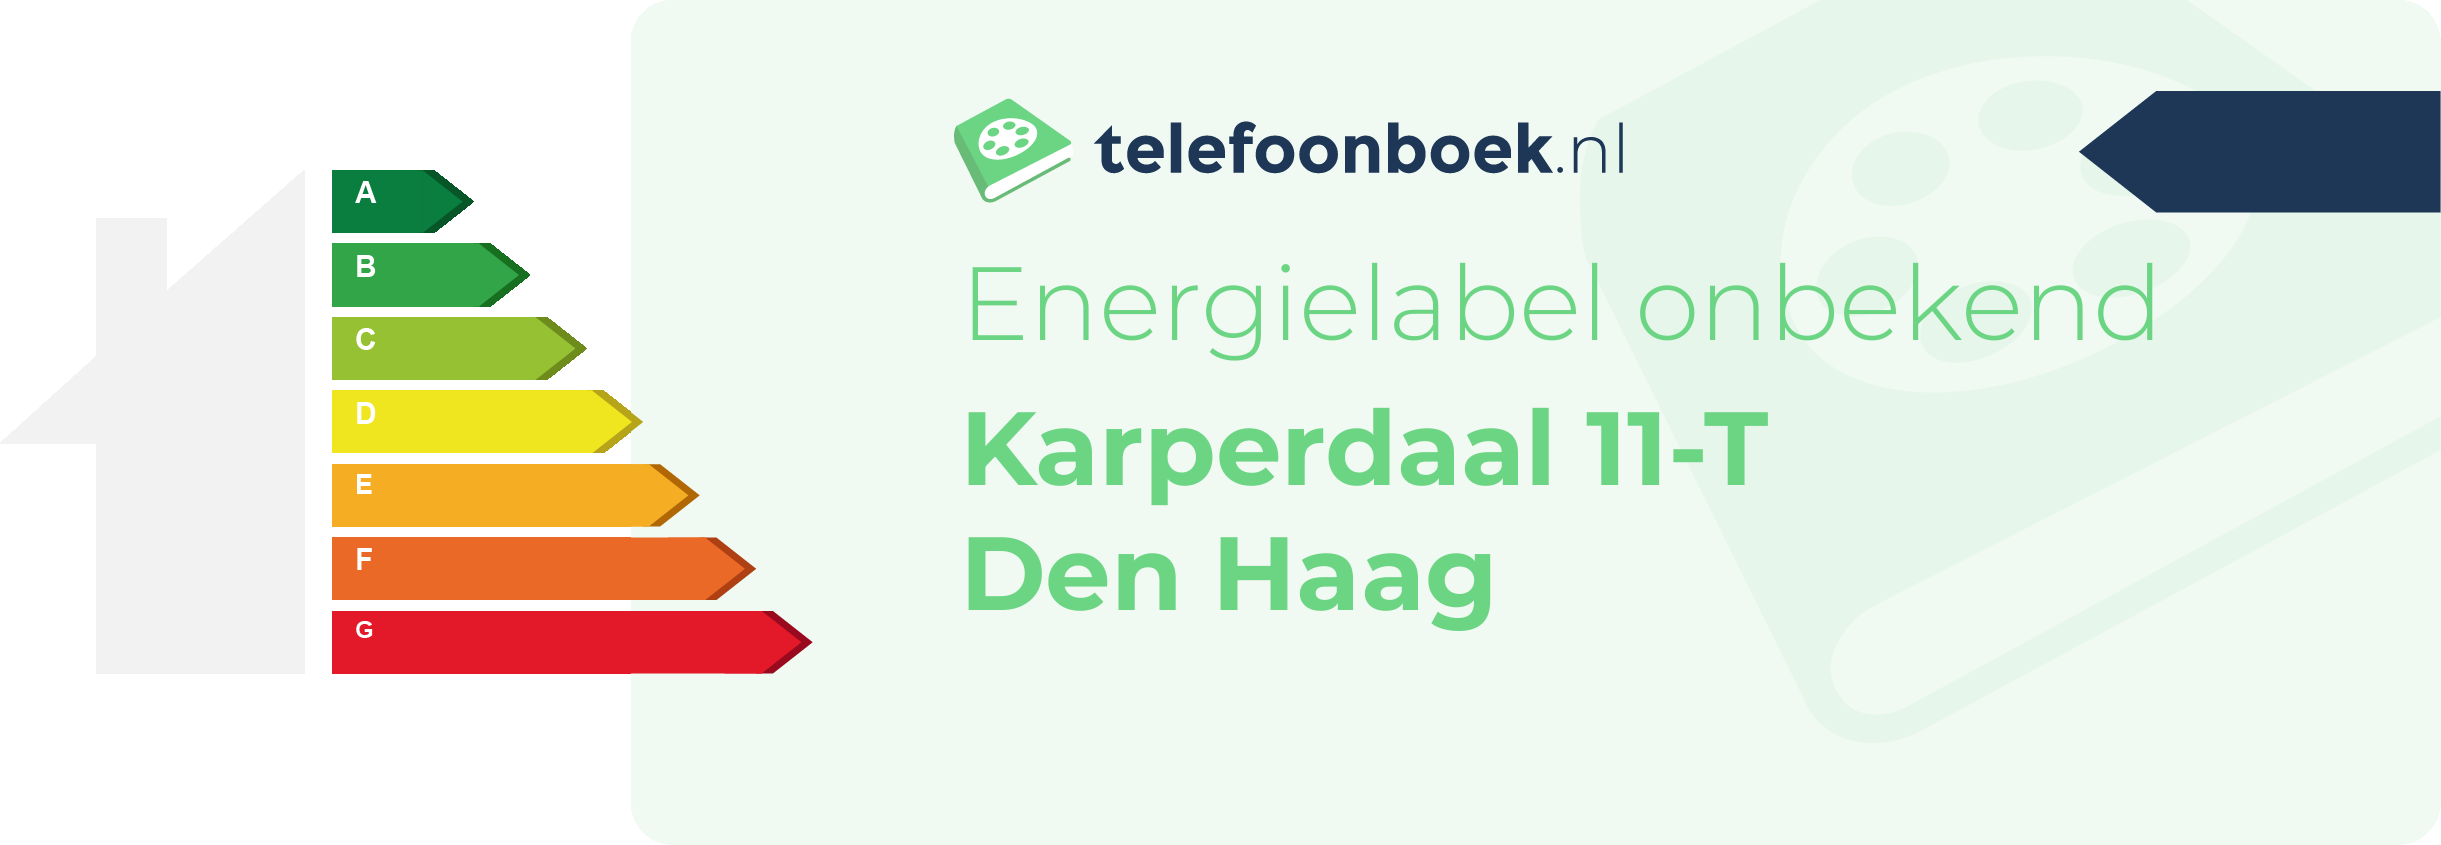 Energielabel Karperdaal 11-T Den Haag